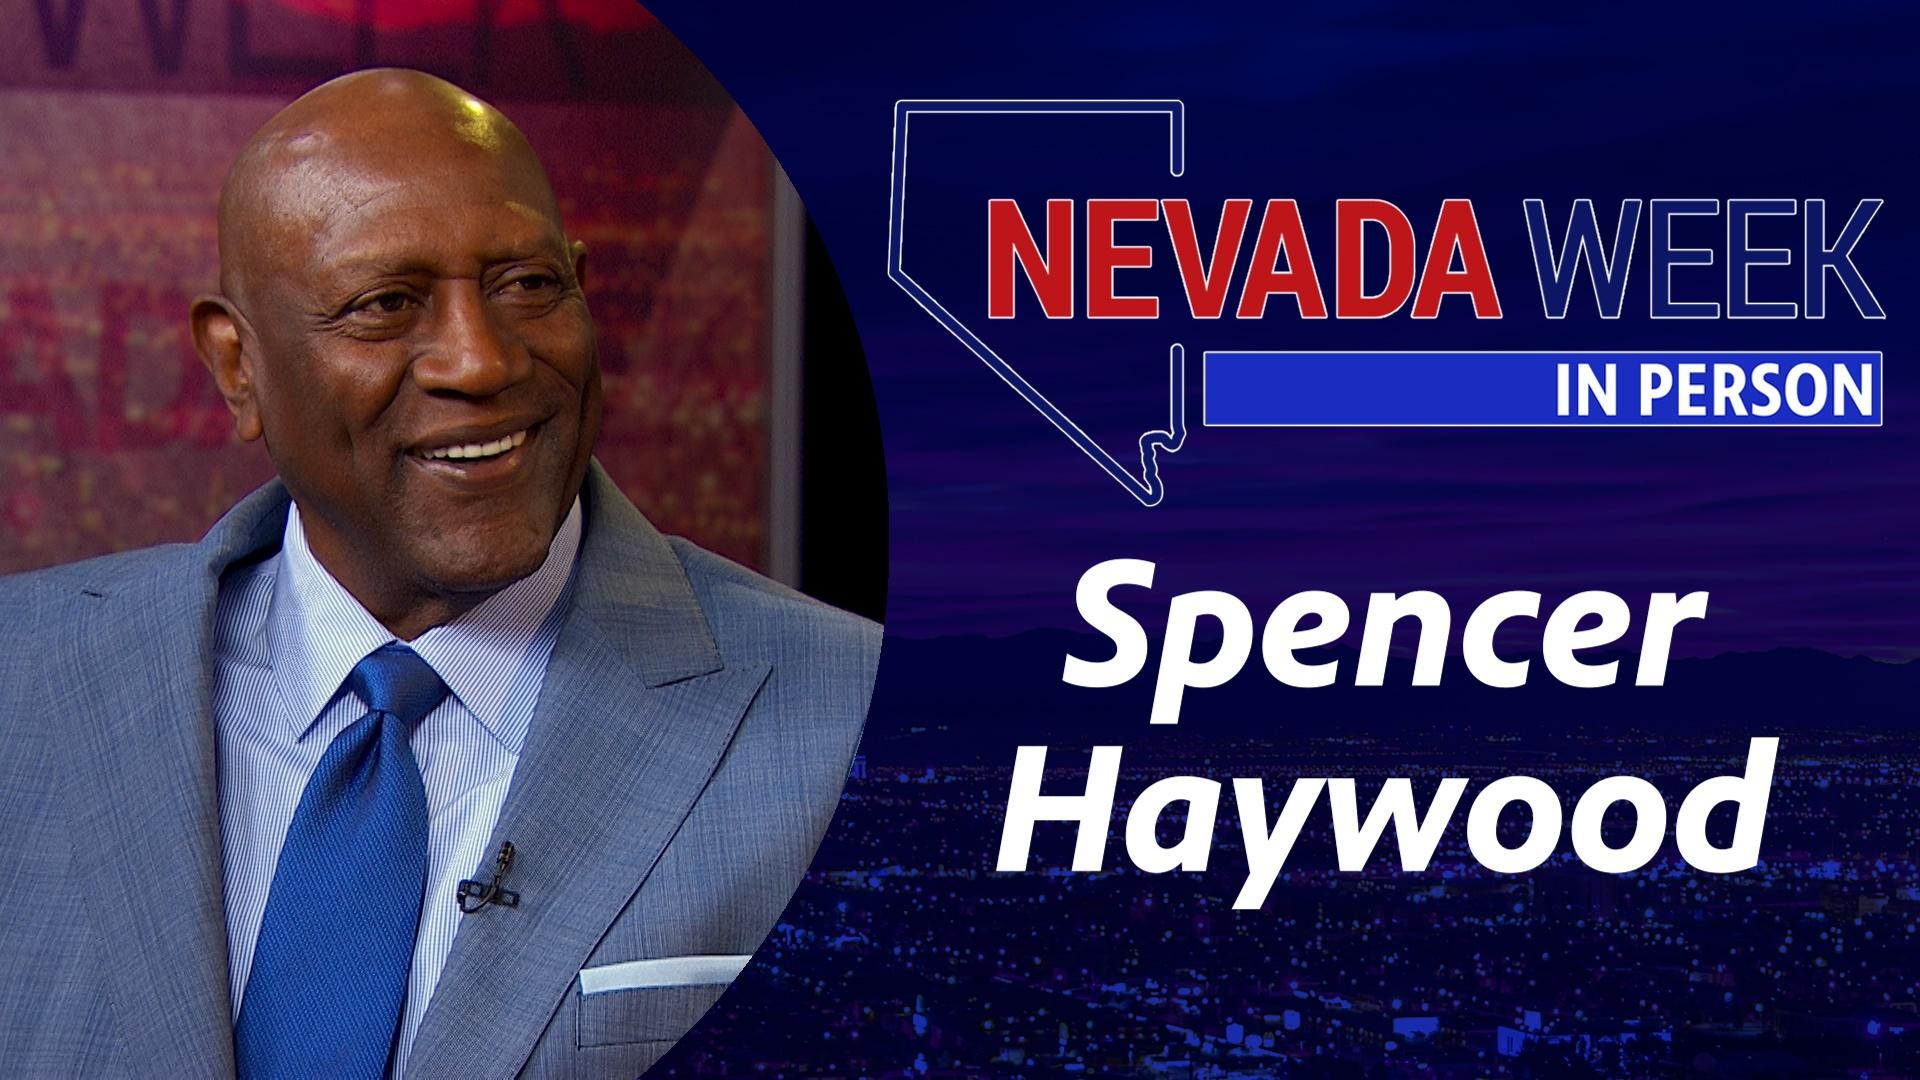 Nevada Week In Person | Spencer Haywood